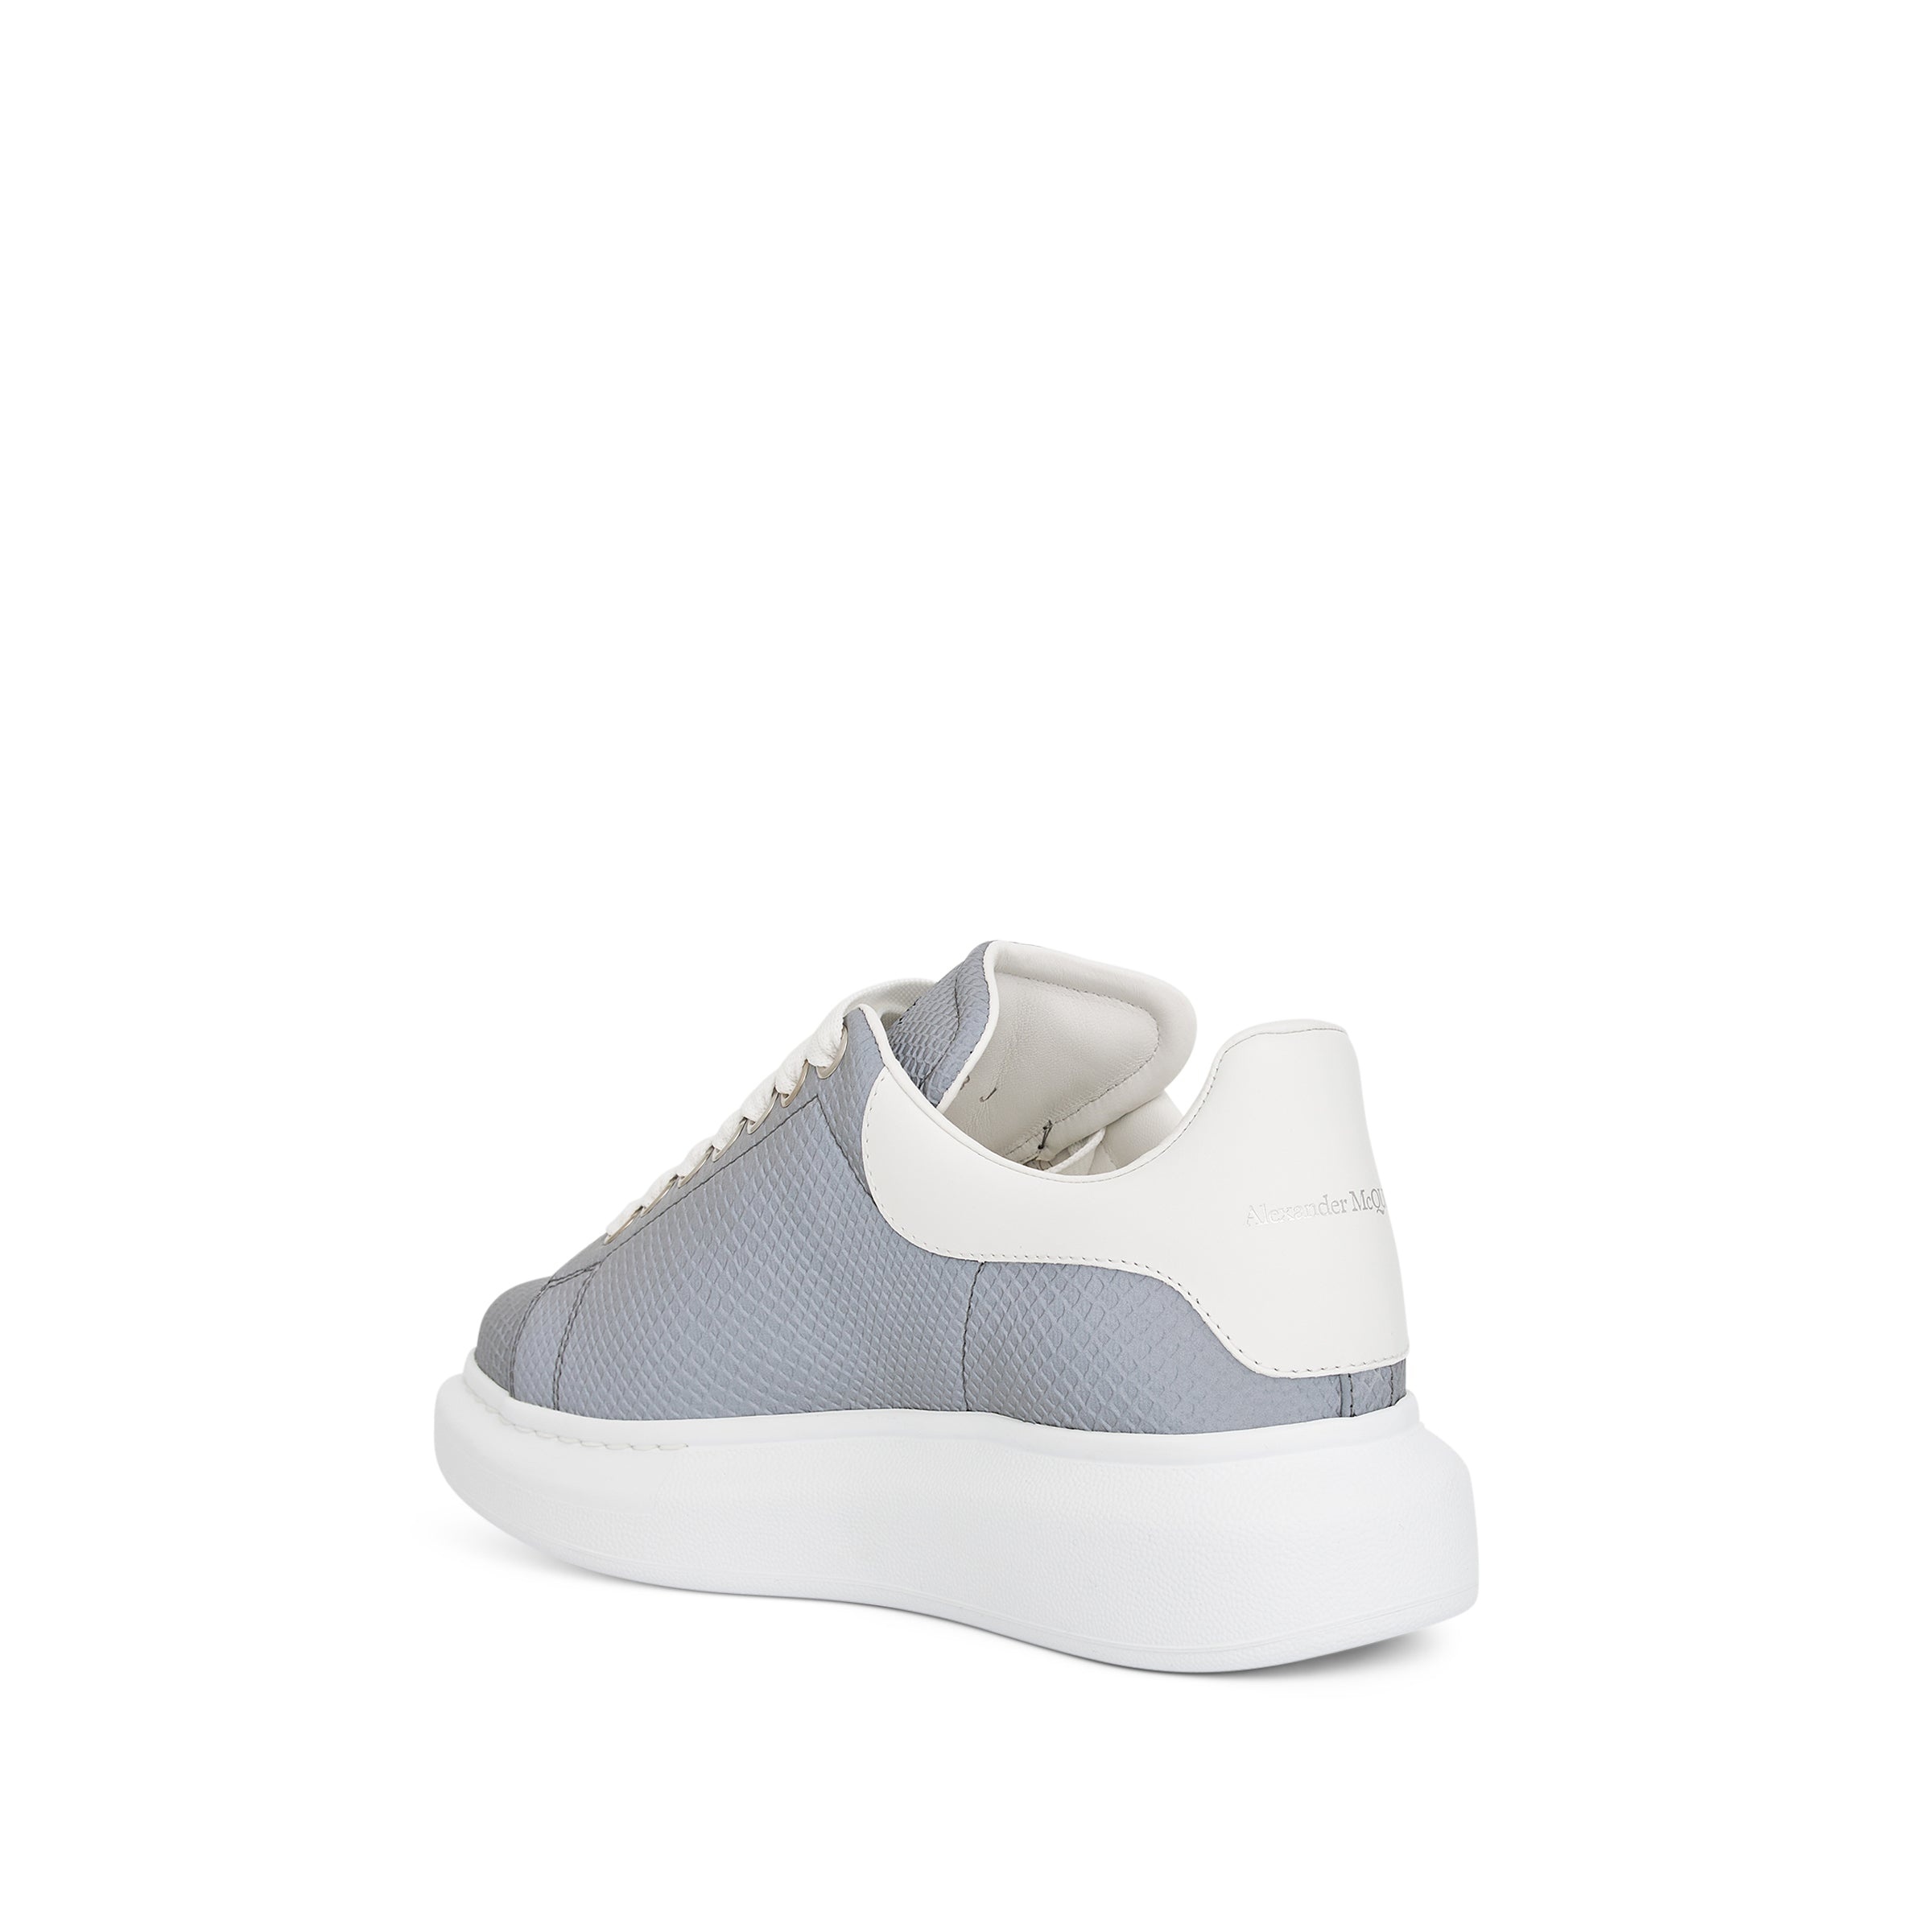 Larry Reflective Sneaker in Grey/White - 3